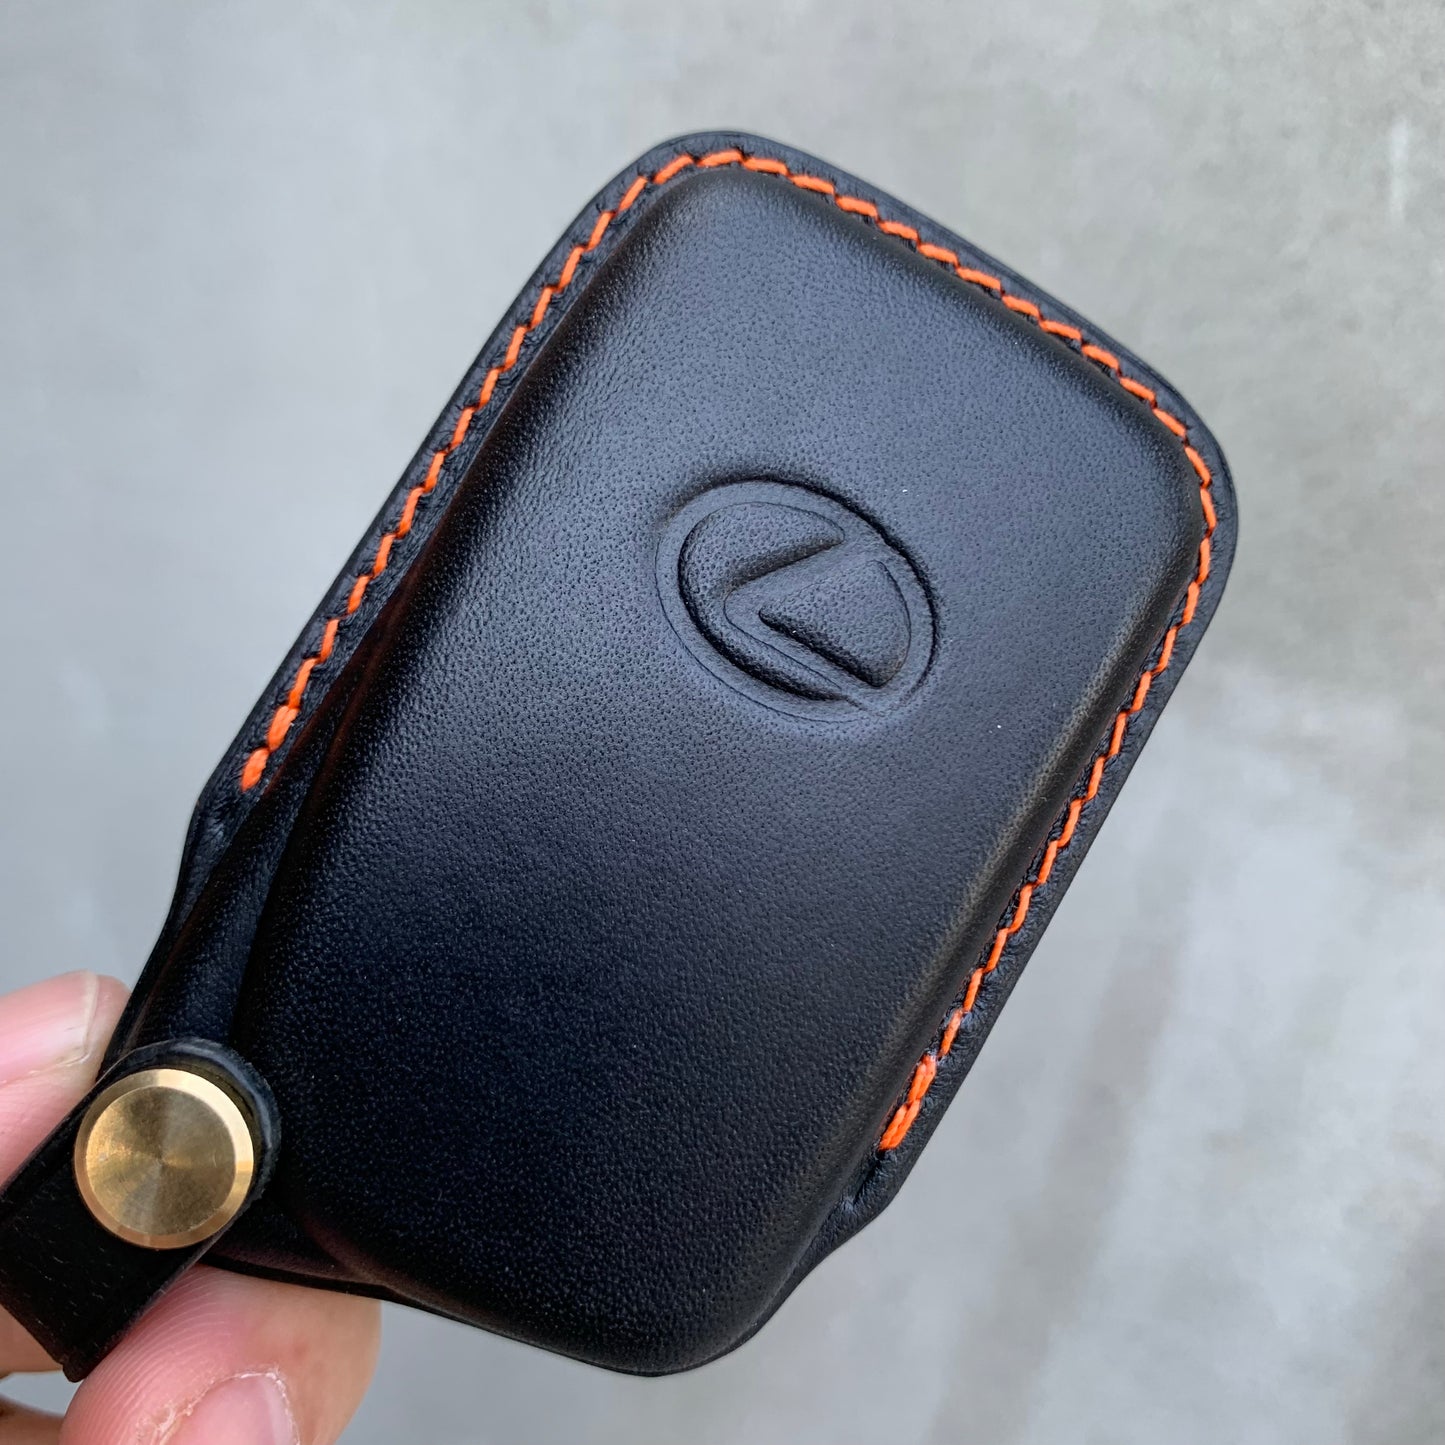 Lexus key fob cover, Buttero Leather key case